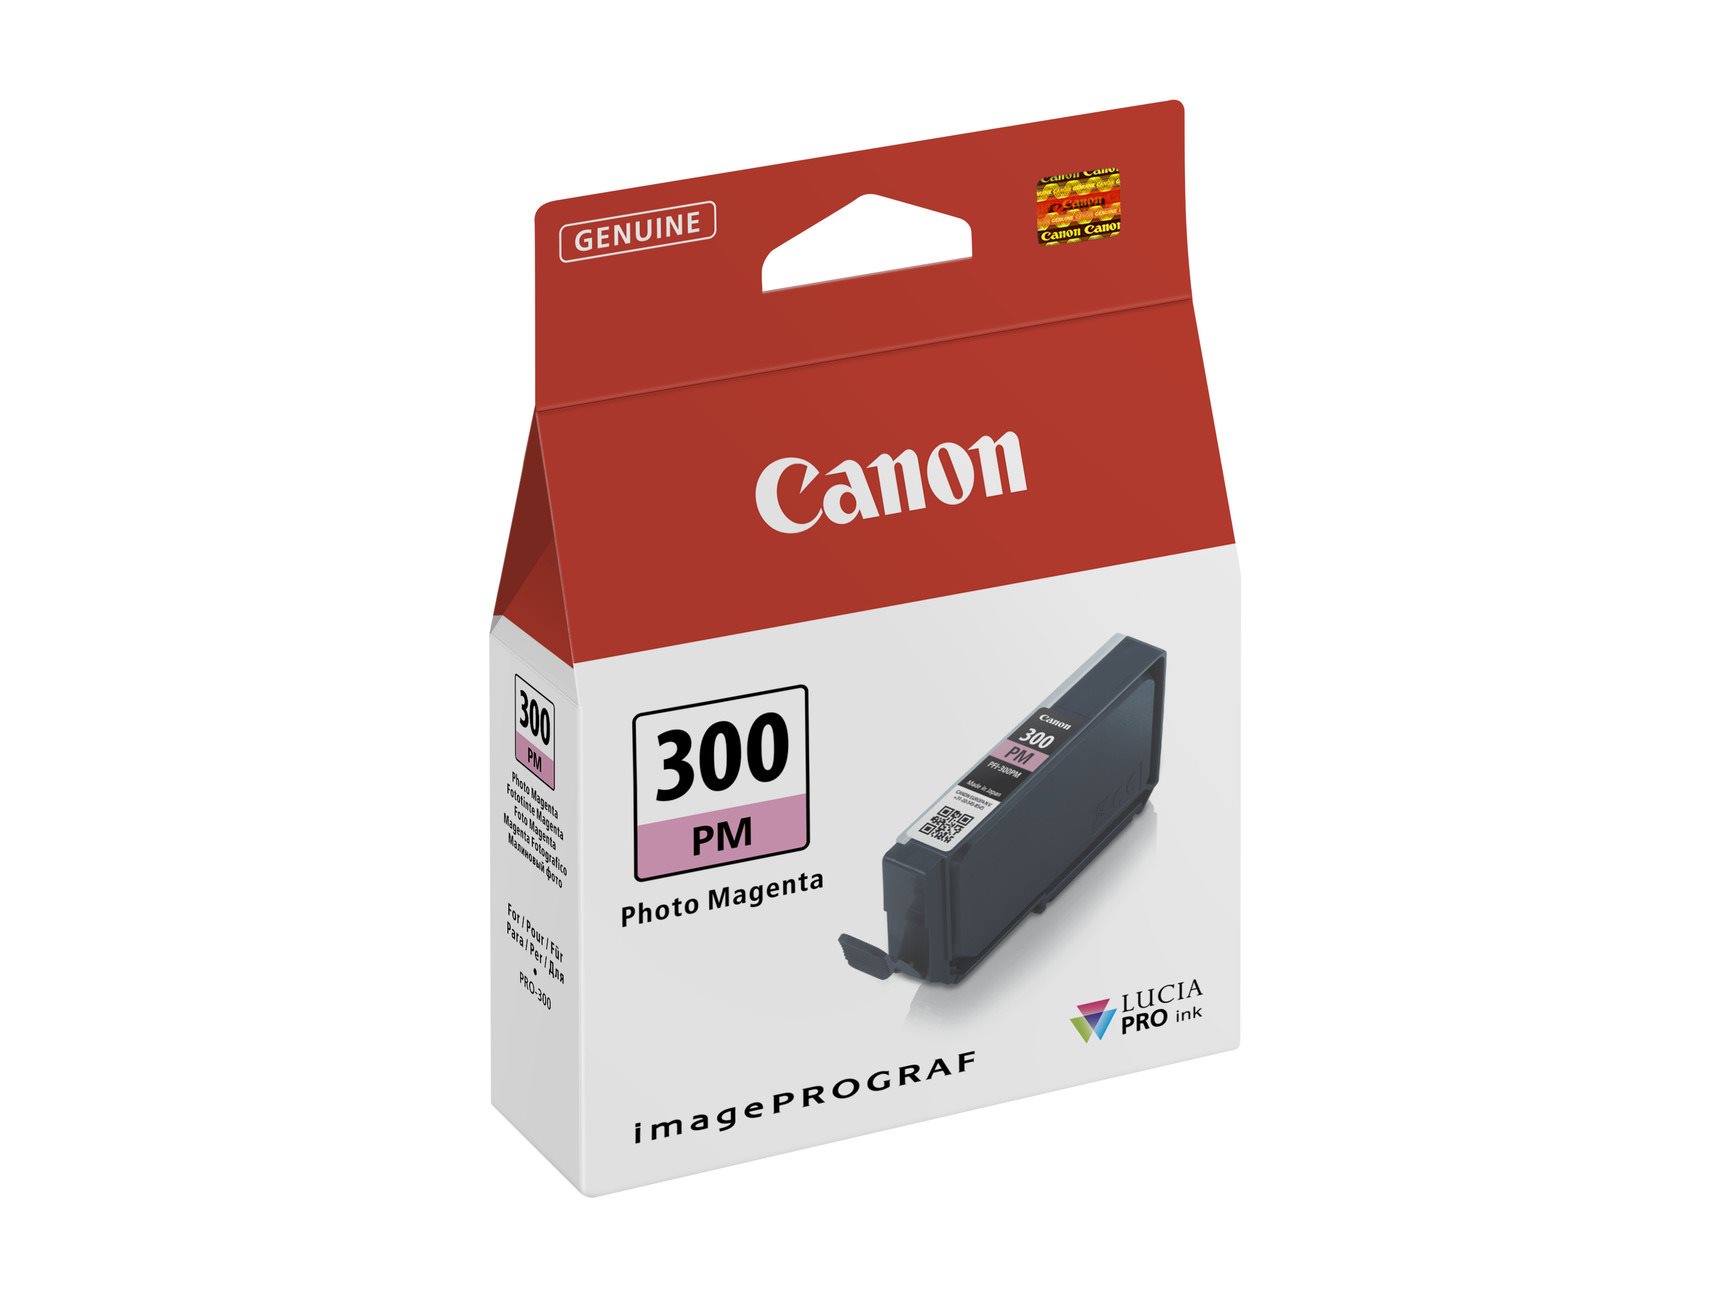 Canon BJ CARTRIDGE PFI-300 PM EUR/OCN0 